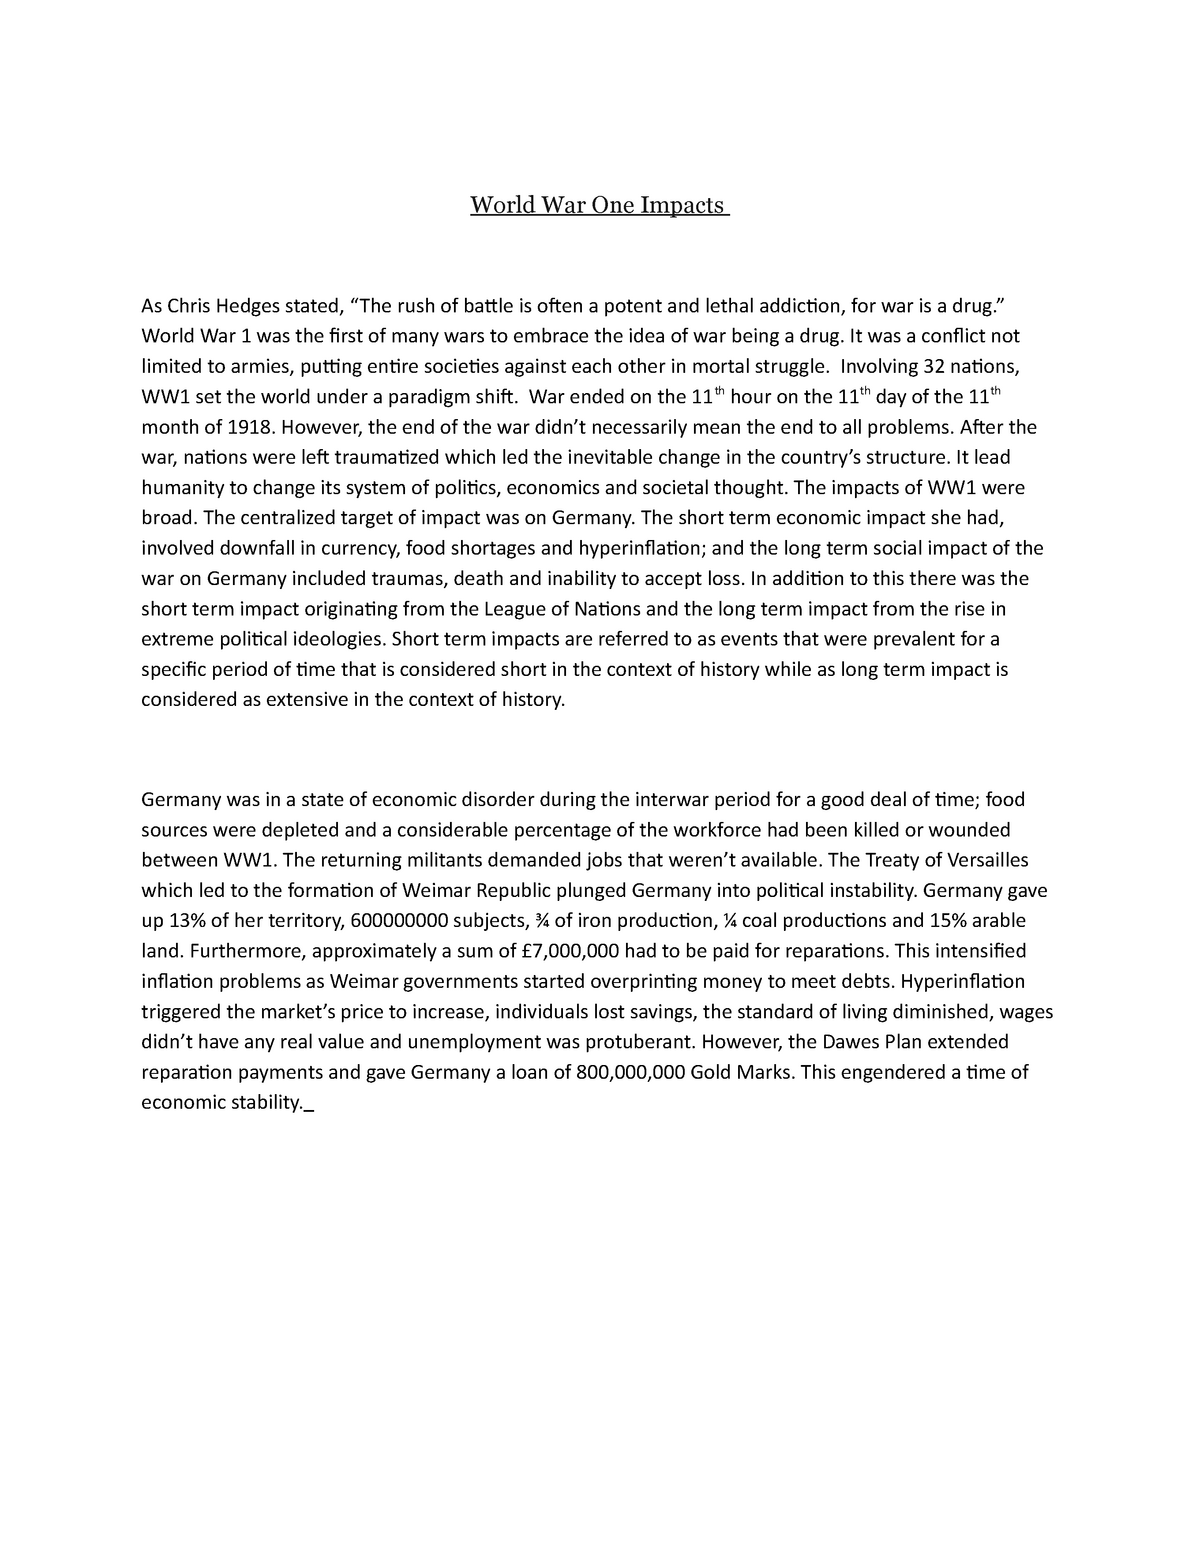 short essay about ww1